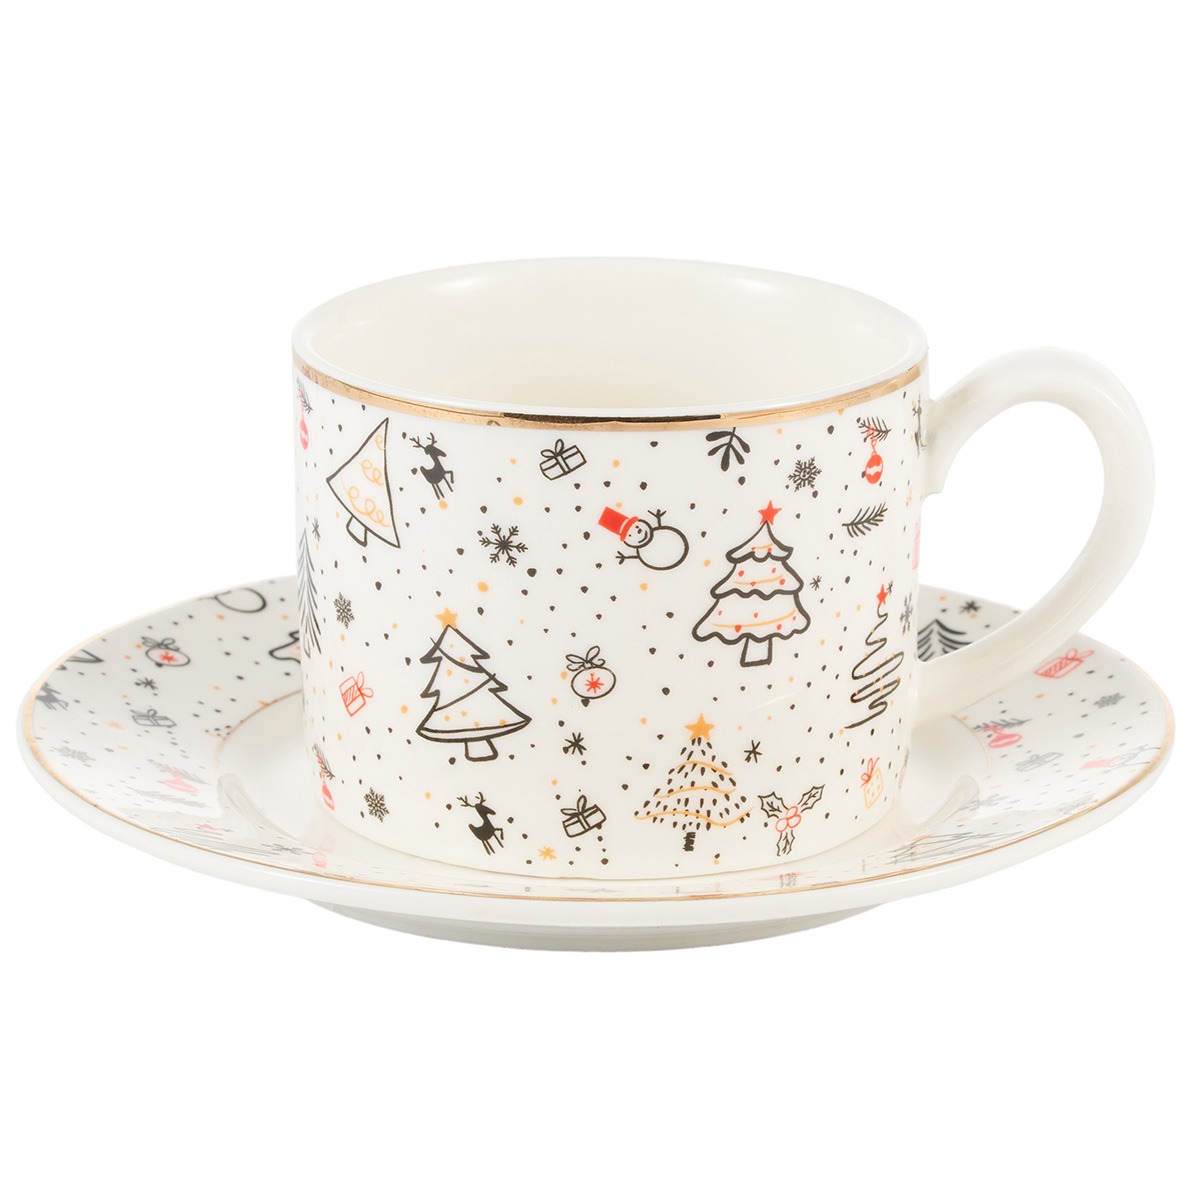 Чайная пара Gipfel Christmas фарфор белый чашка 250 мл, блюдце 14 см пара чайная чашка блюдце 240 мл tudor tu9999 3